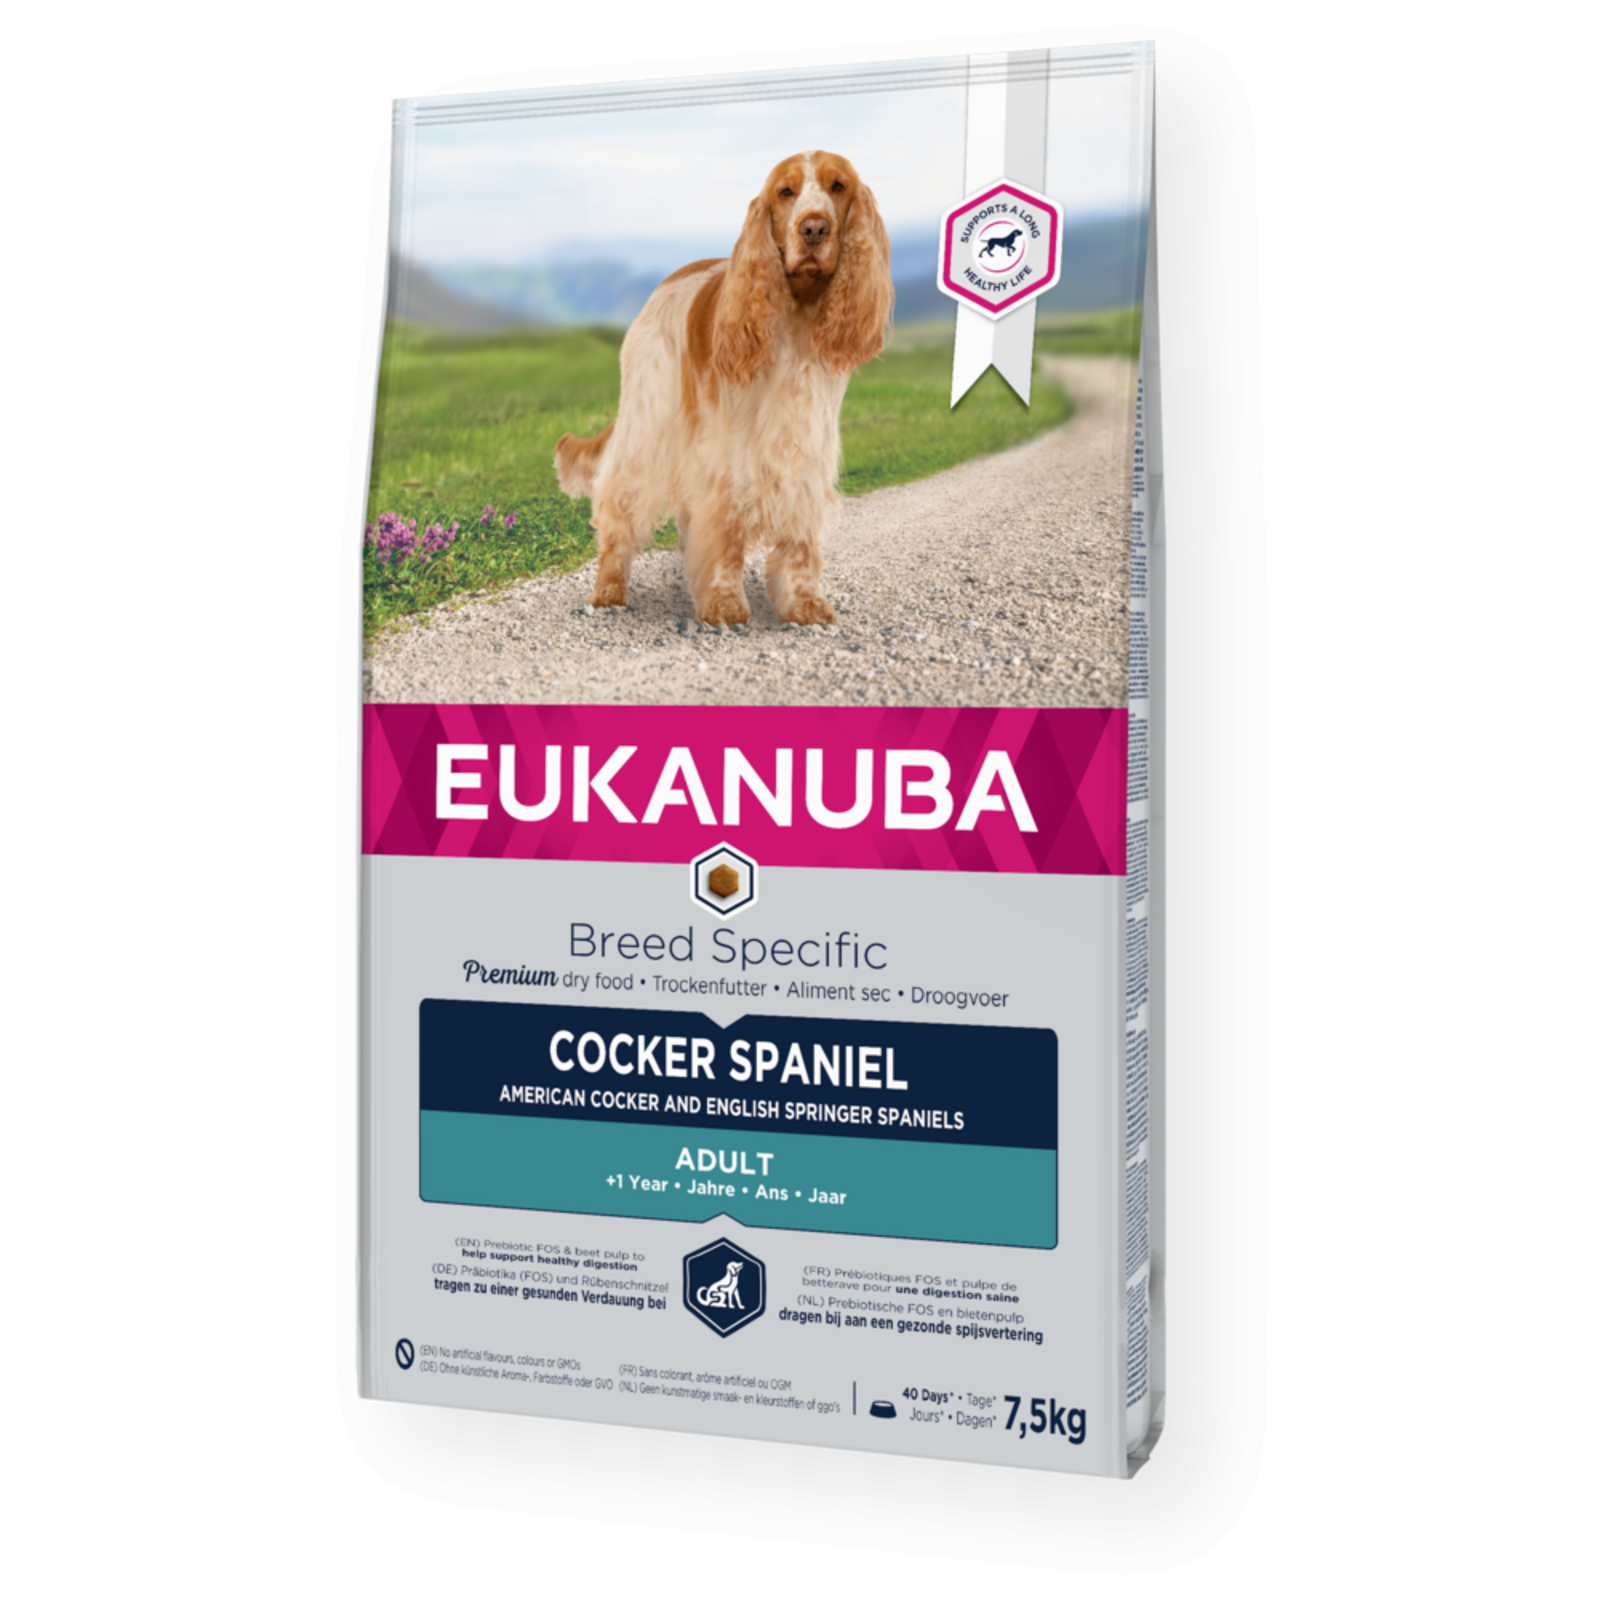 Eukanuba Breed Specific Cocker Spaniel